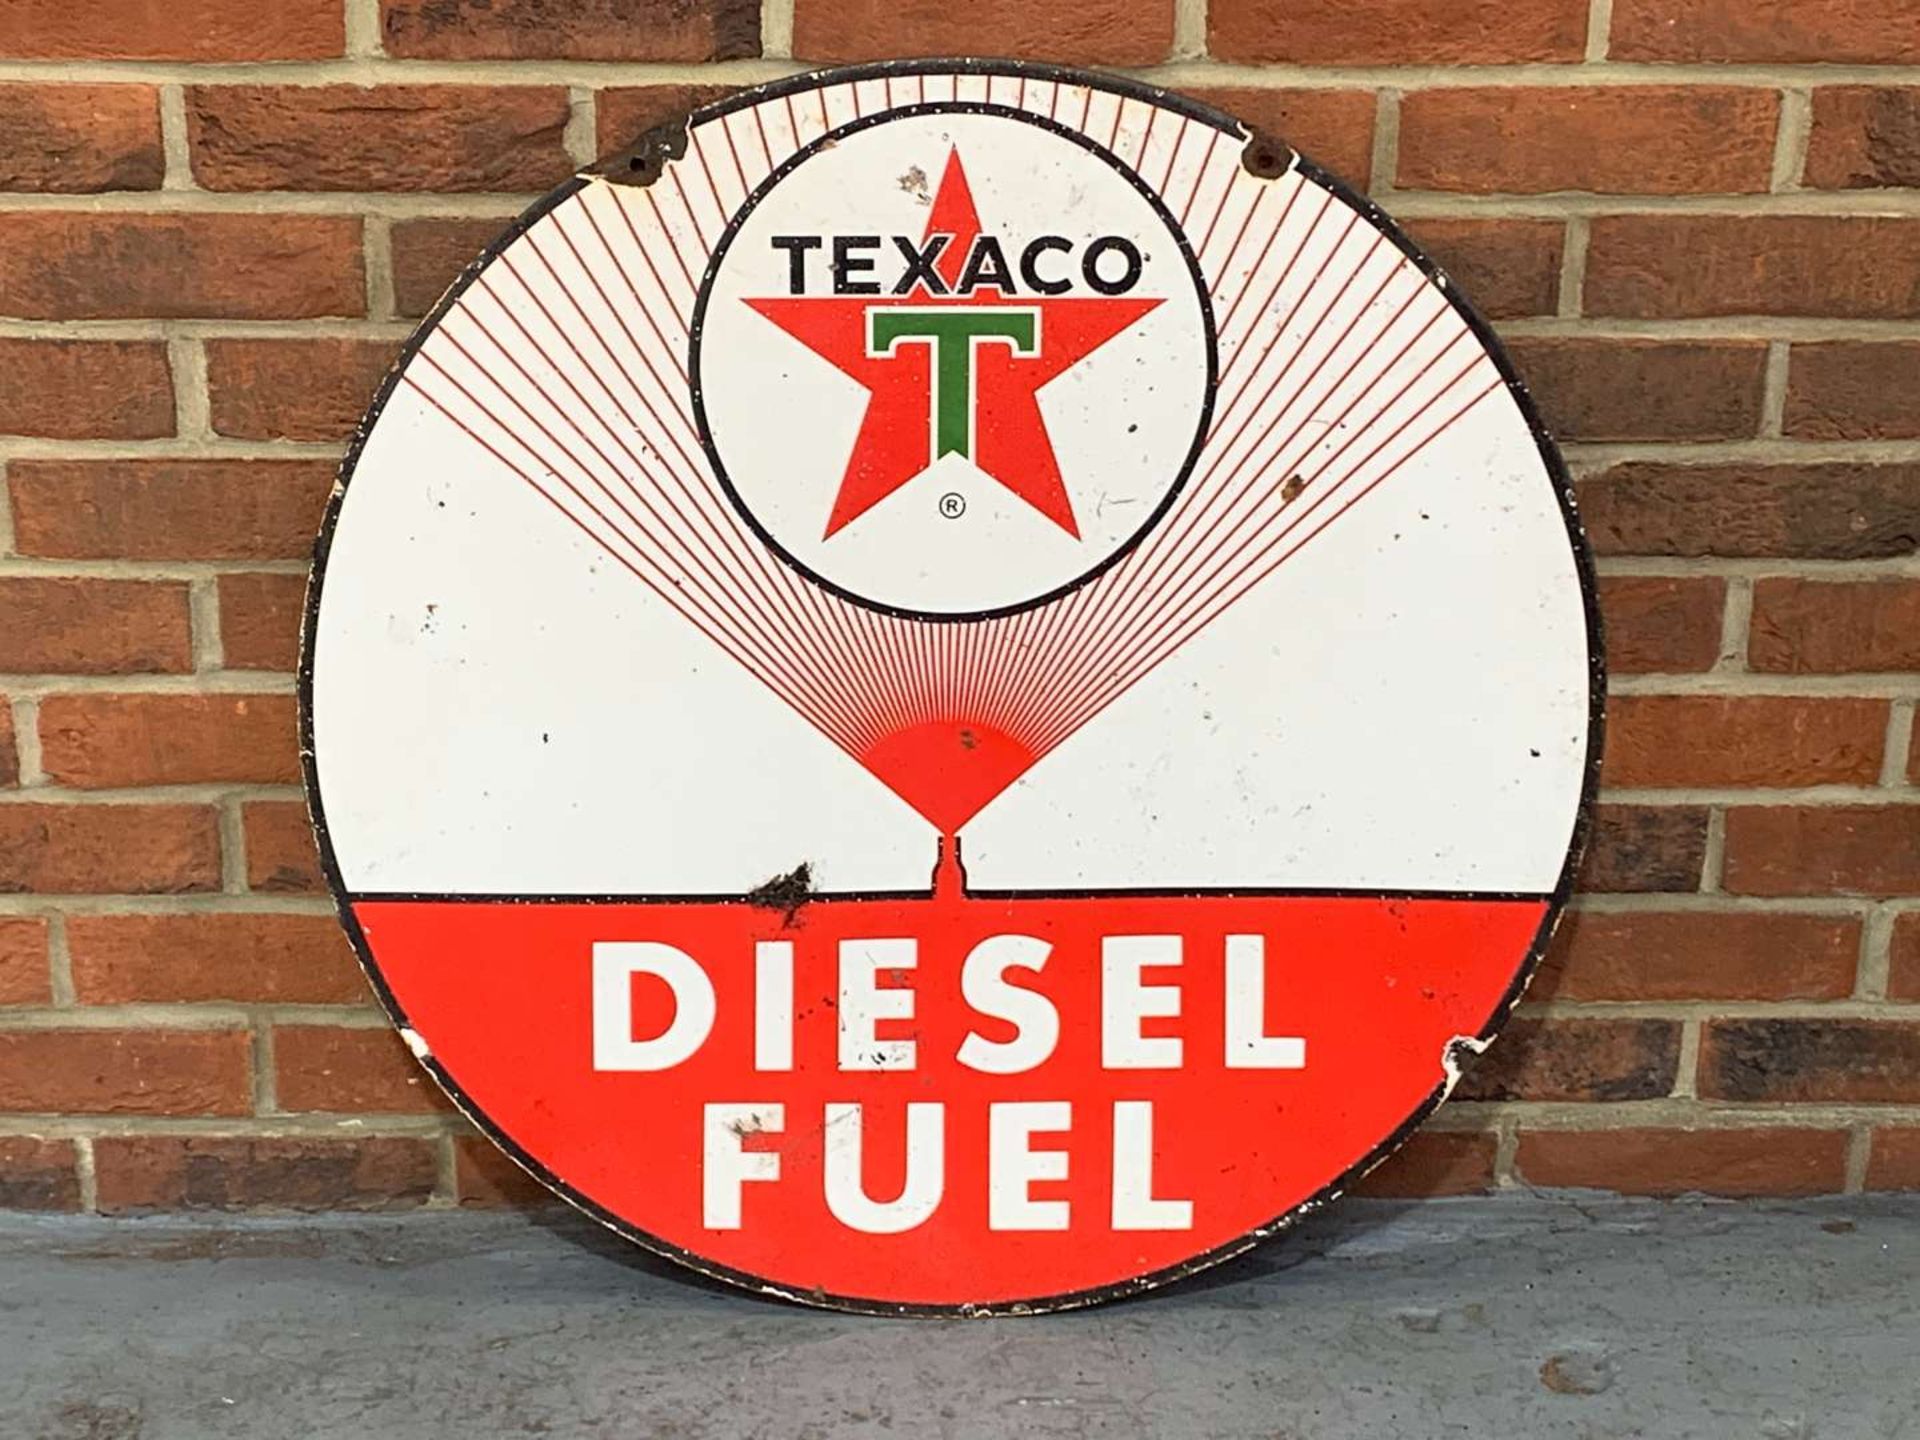 Texaco Diesel Fuel Circular Enamel Sign - Image 2 of 2